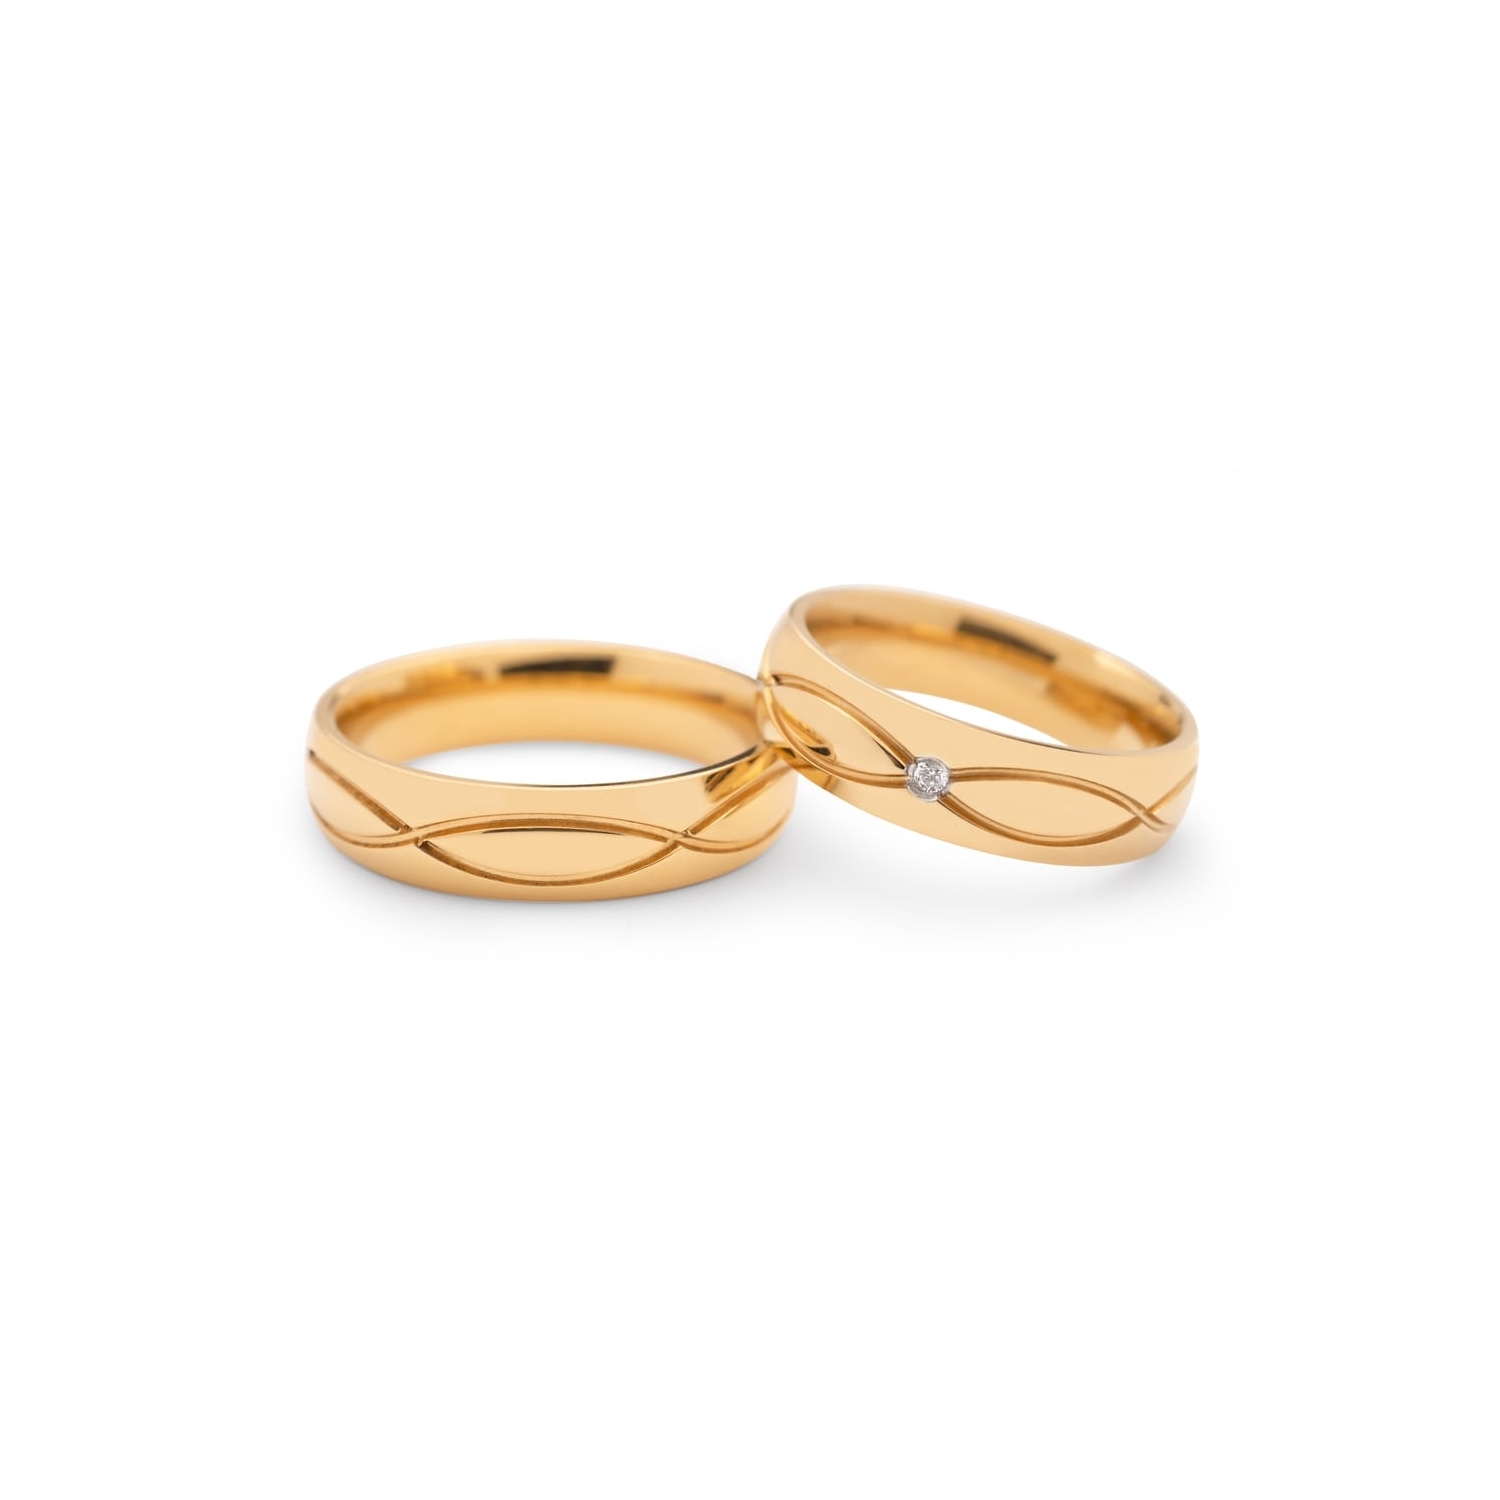 Golden wedding rings with diamonds "VKA 098"